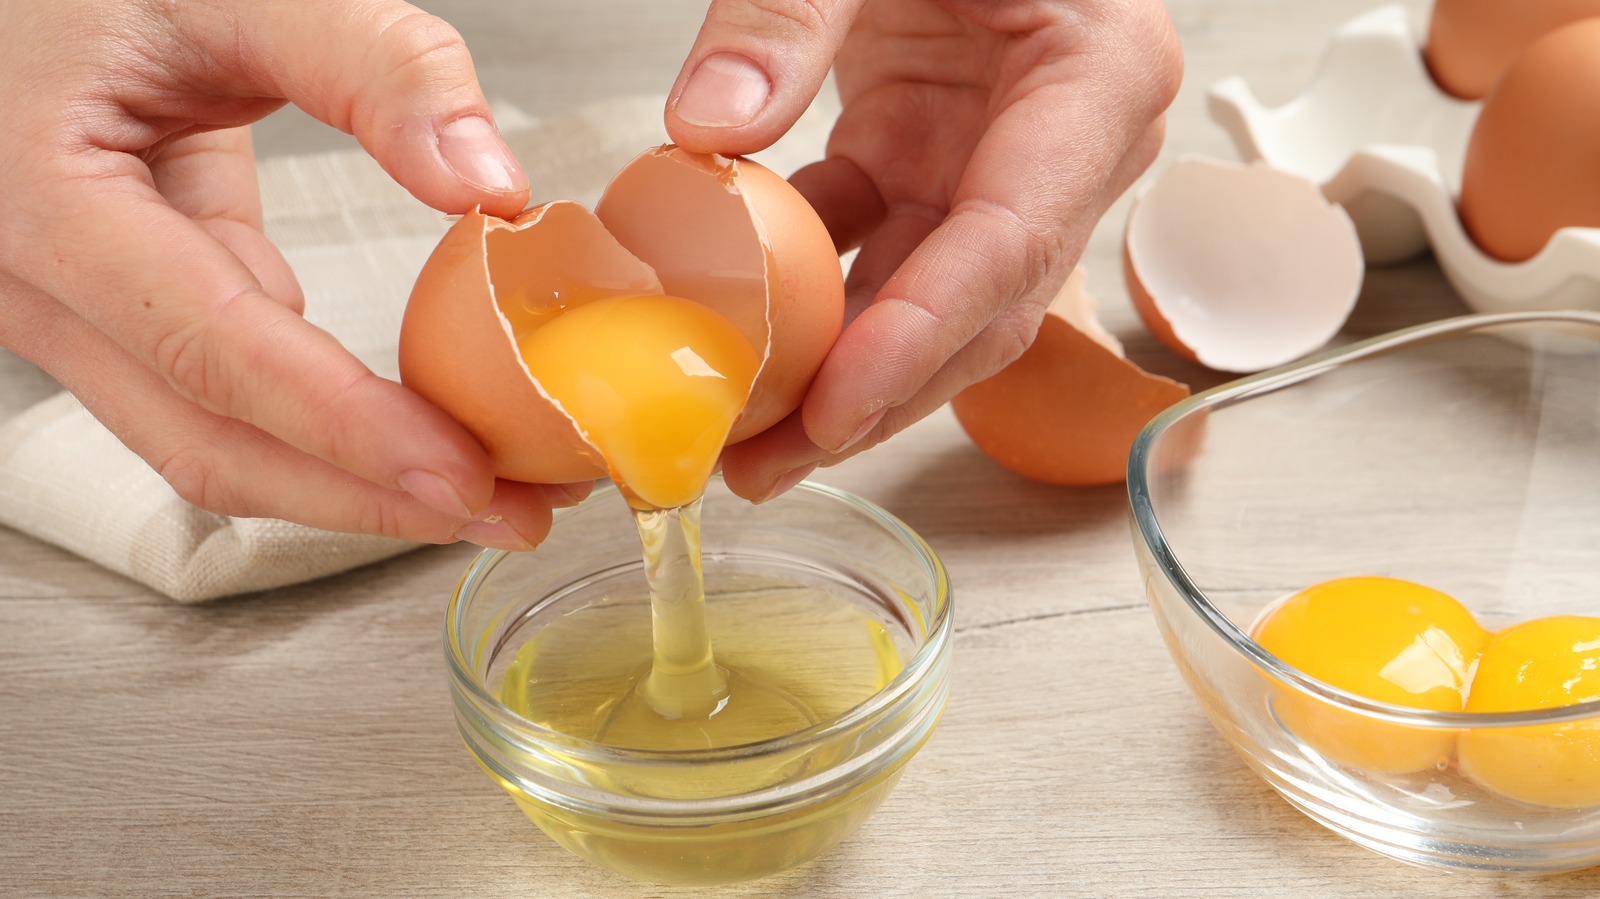 Recipes Using Egg Yolks